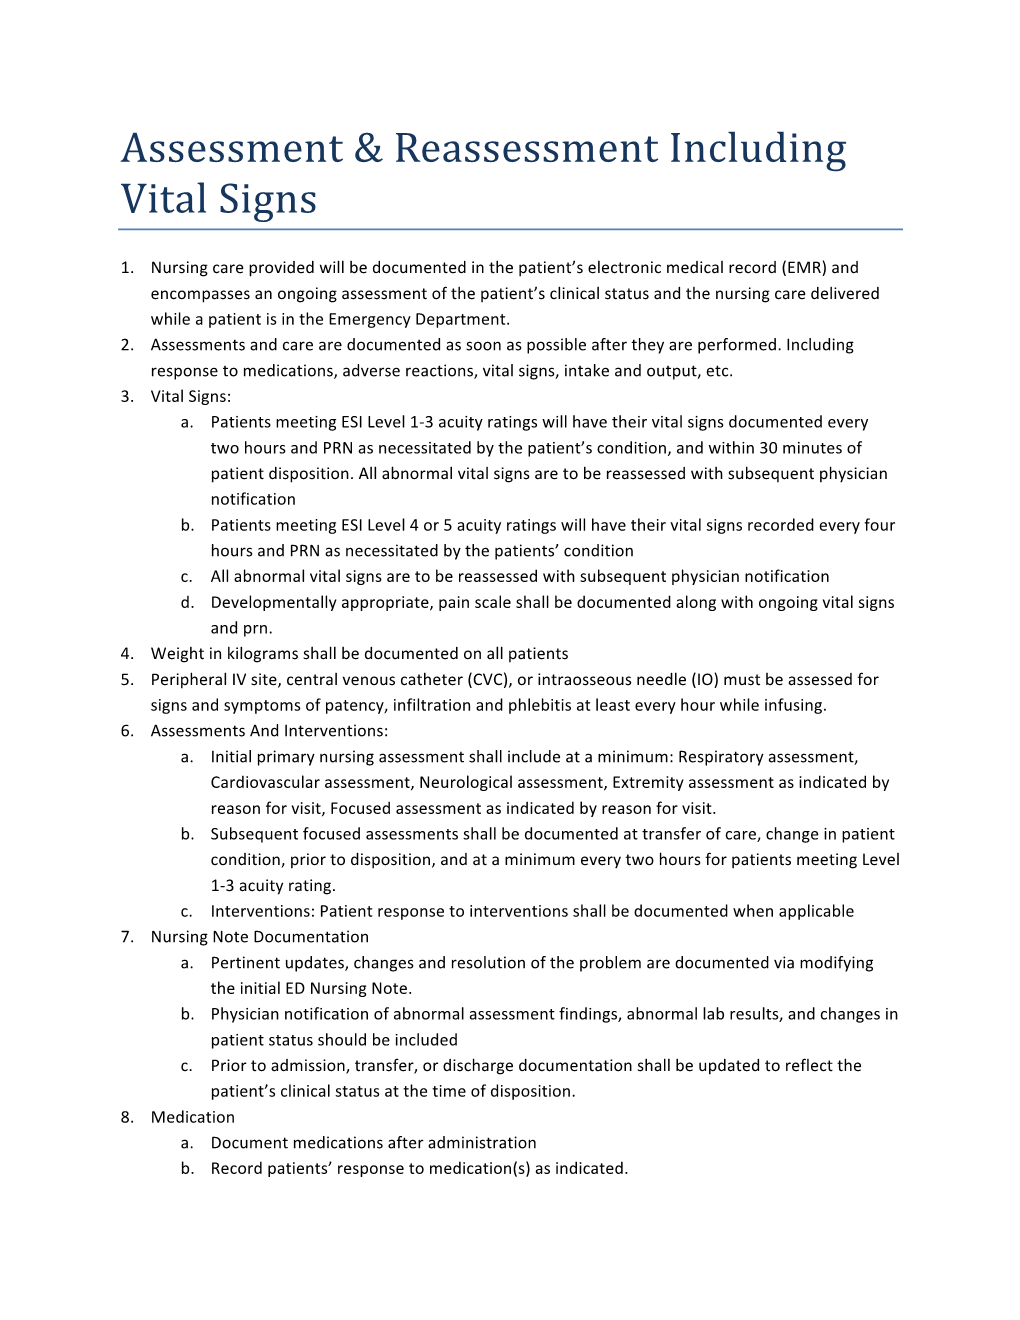 Assessment & Reassessment Including Vital Signs